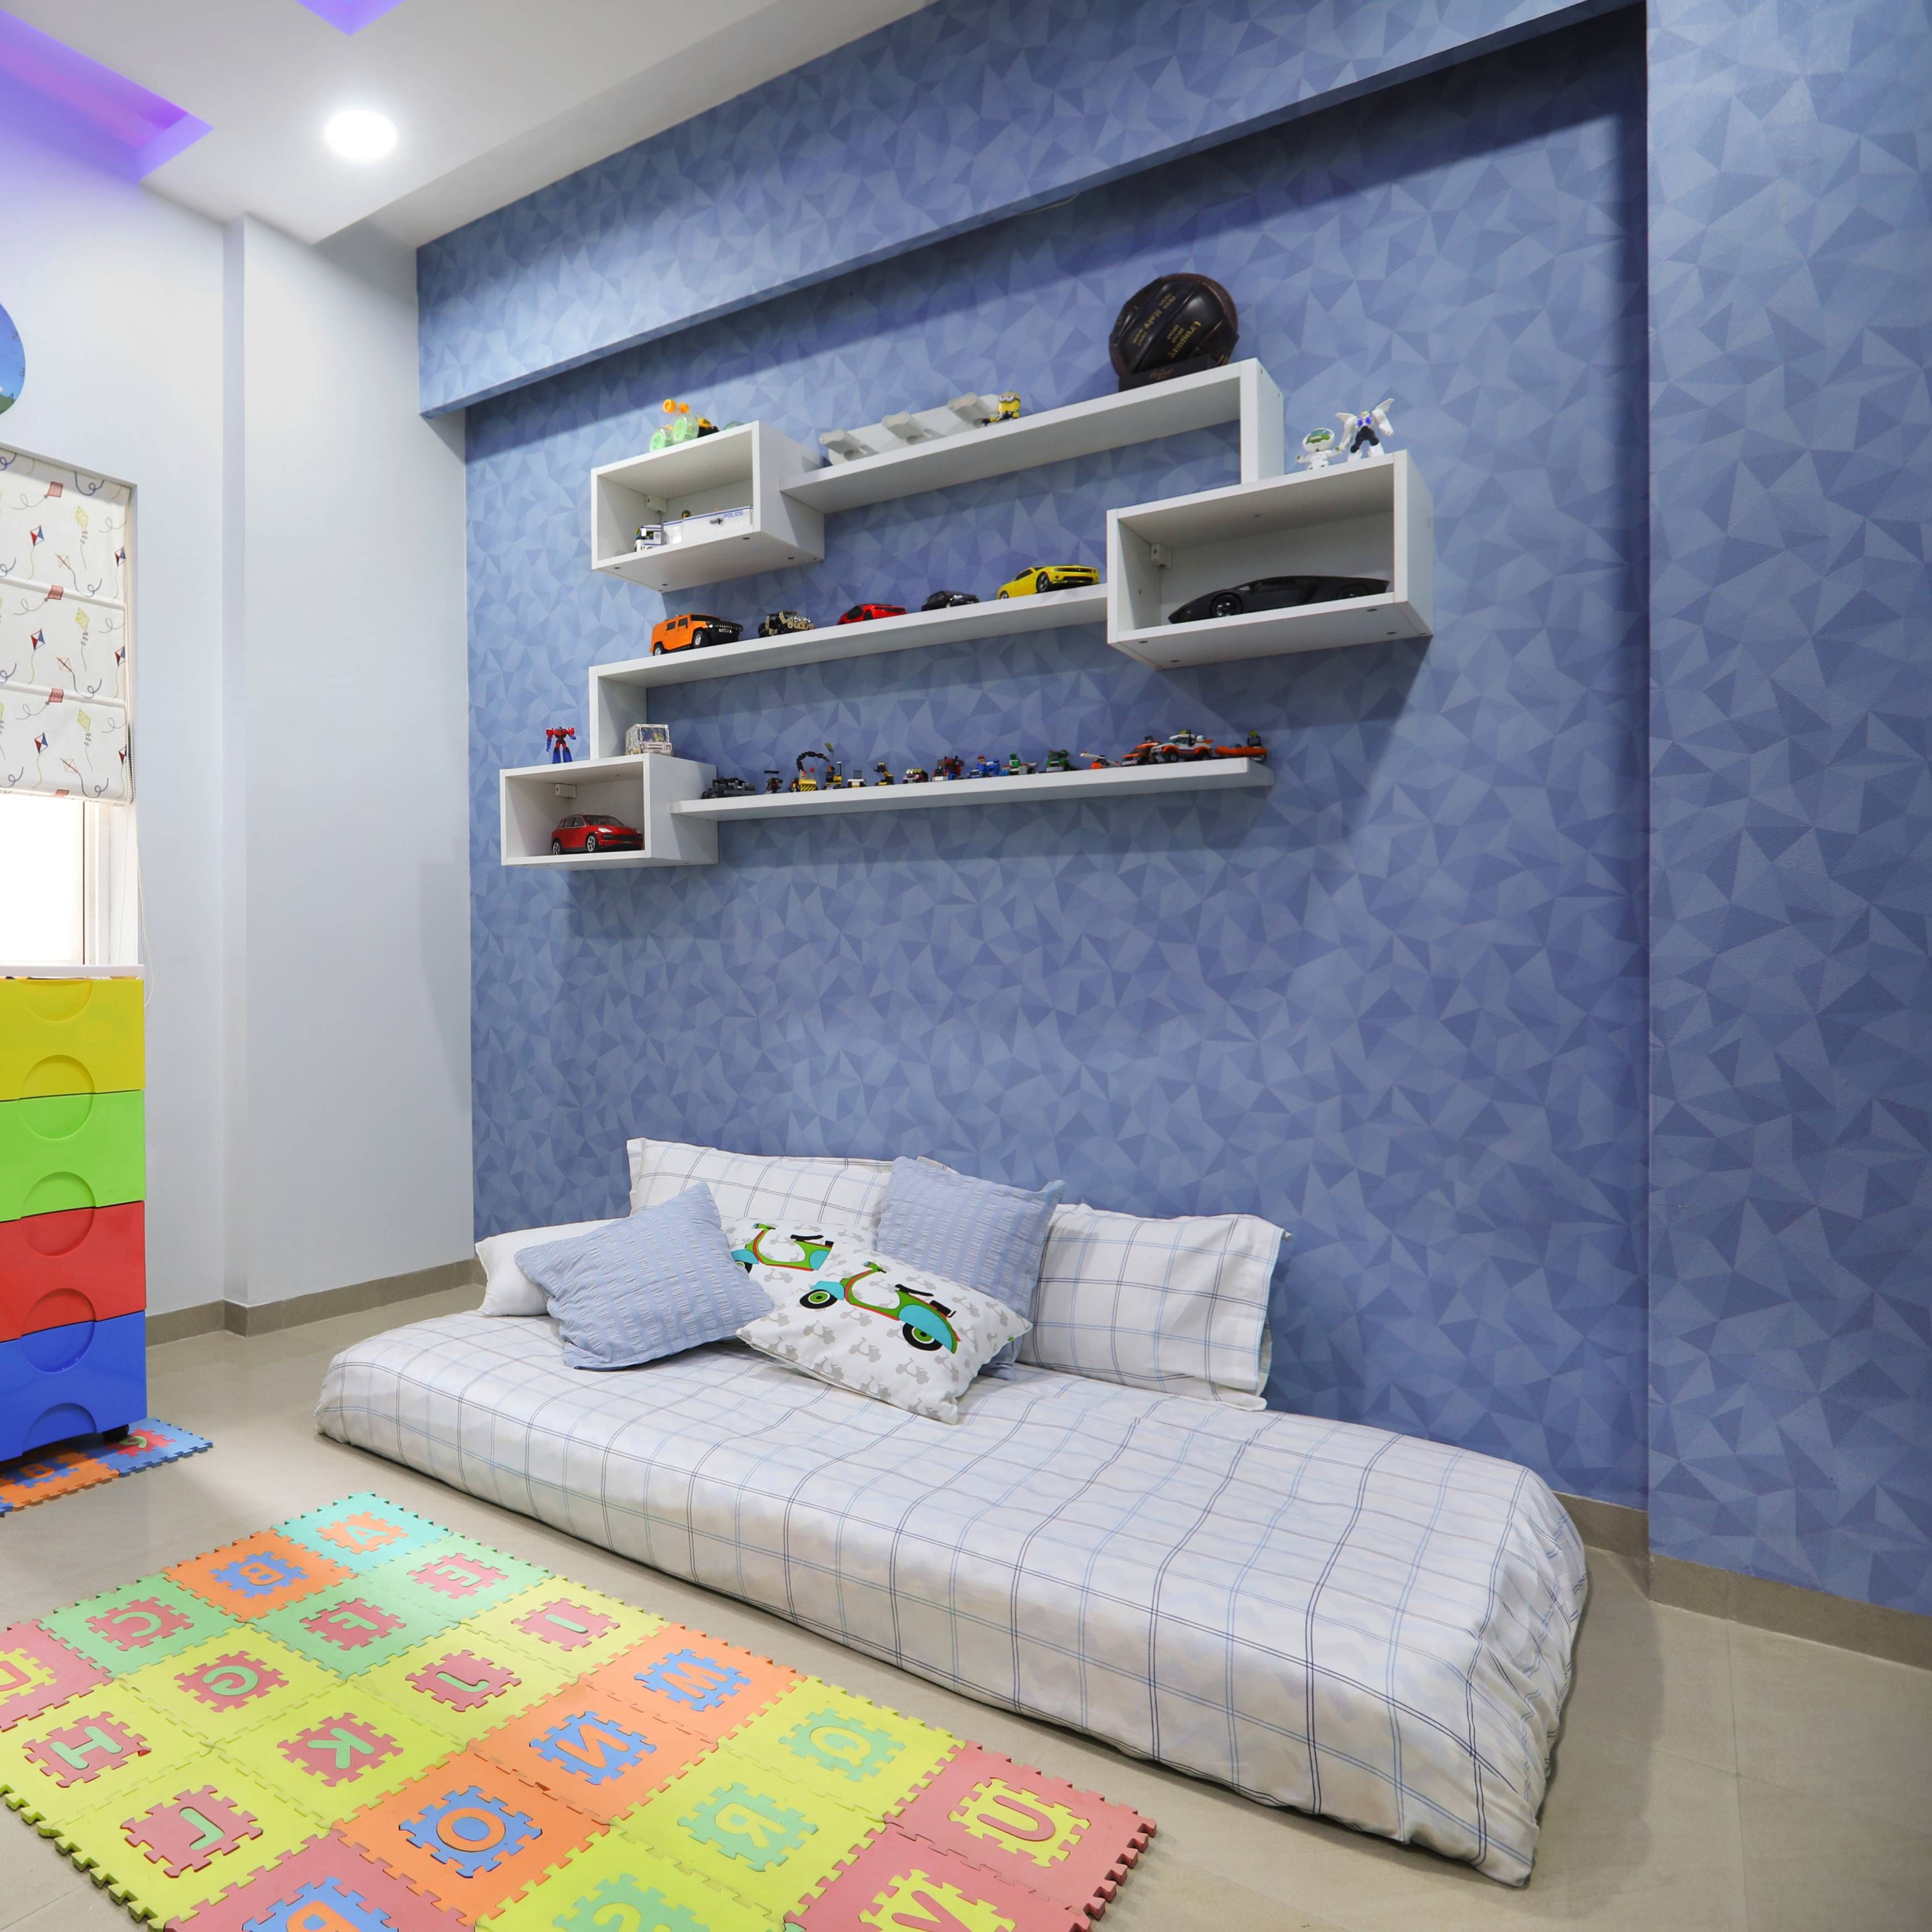 Modern Kids Bedroom Wallpaper Design With A Triangular Pattern